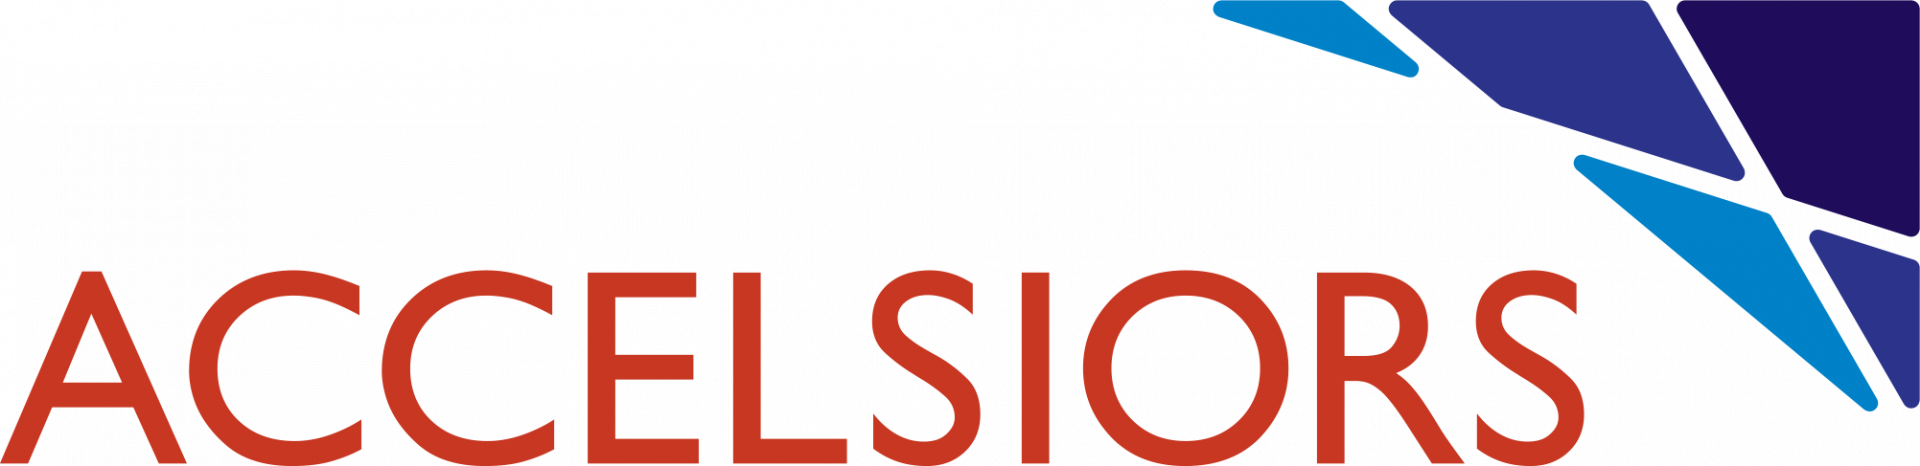 Accelsiors-logo-2016.png